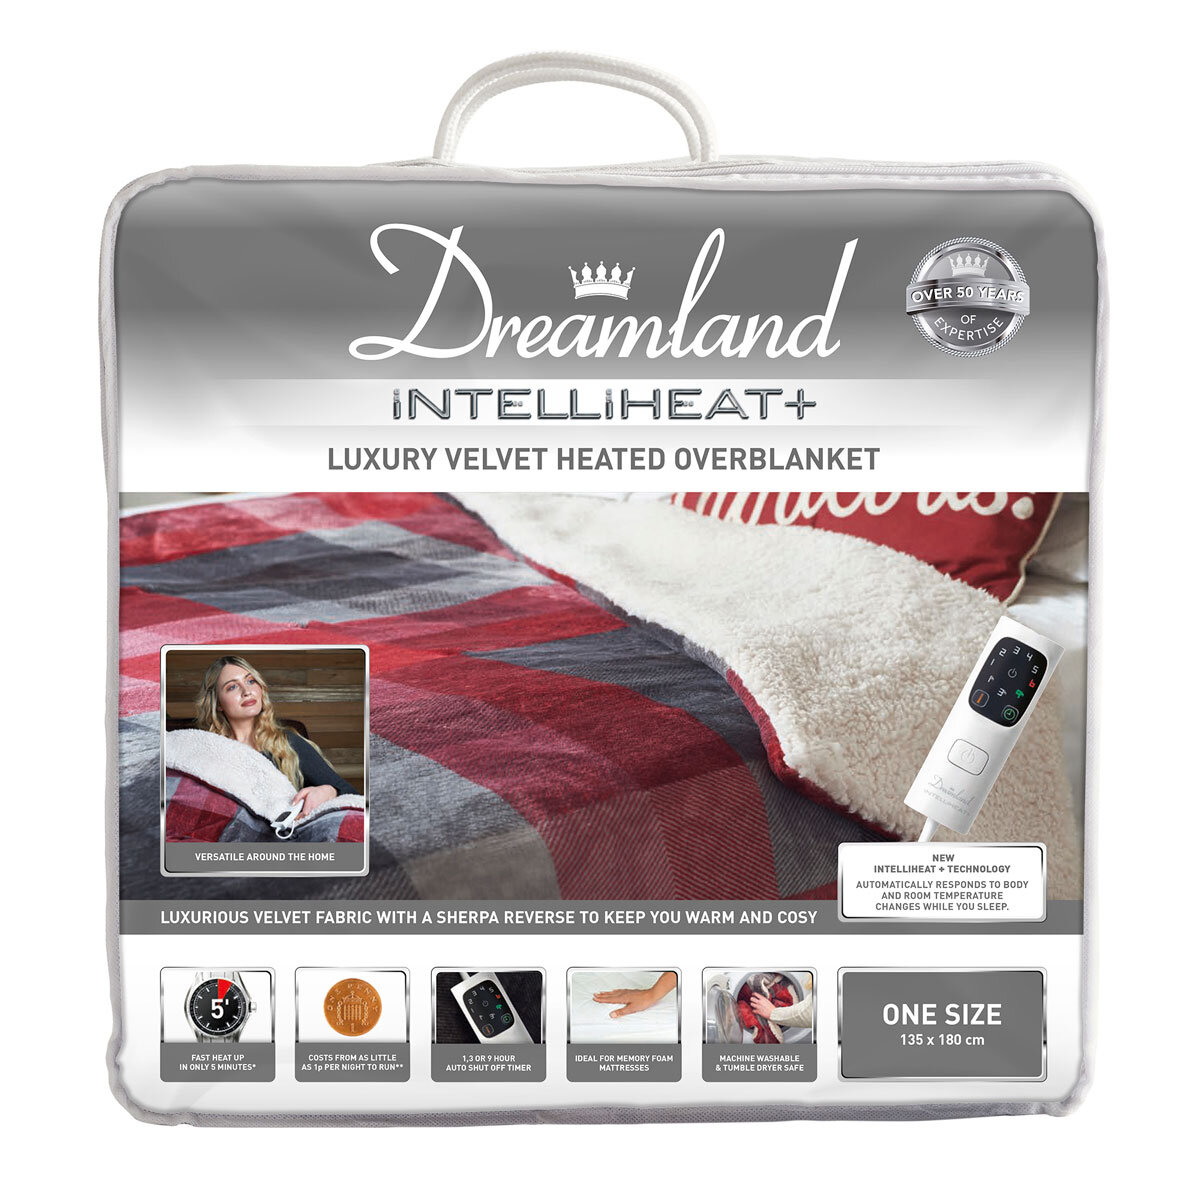 Dreamland Intelliheat+ Luxury Velvet & Sherpa Heated Overblanket